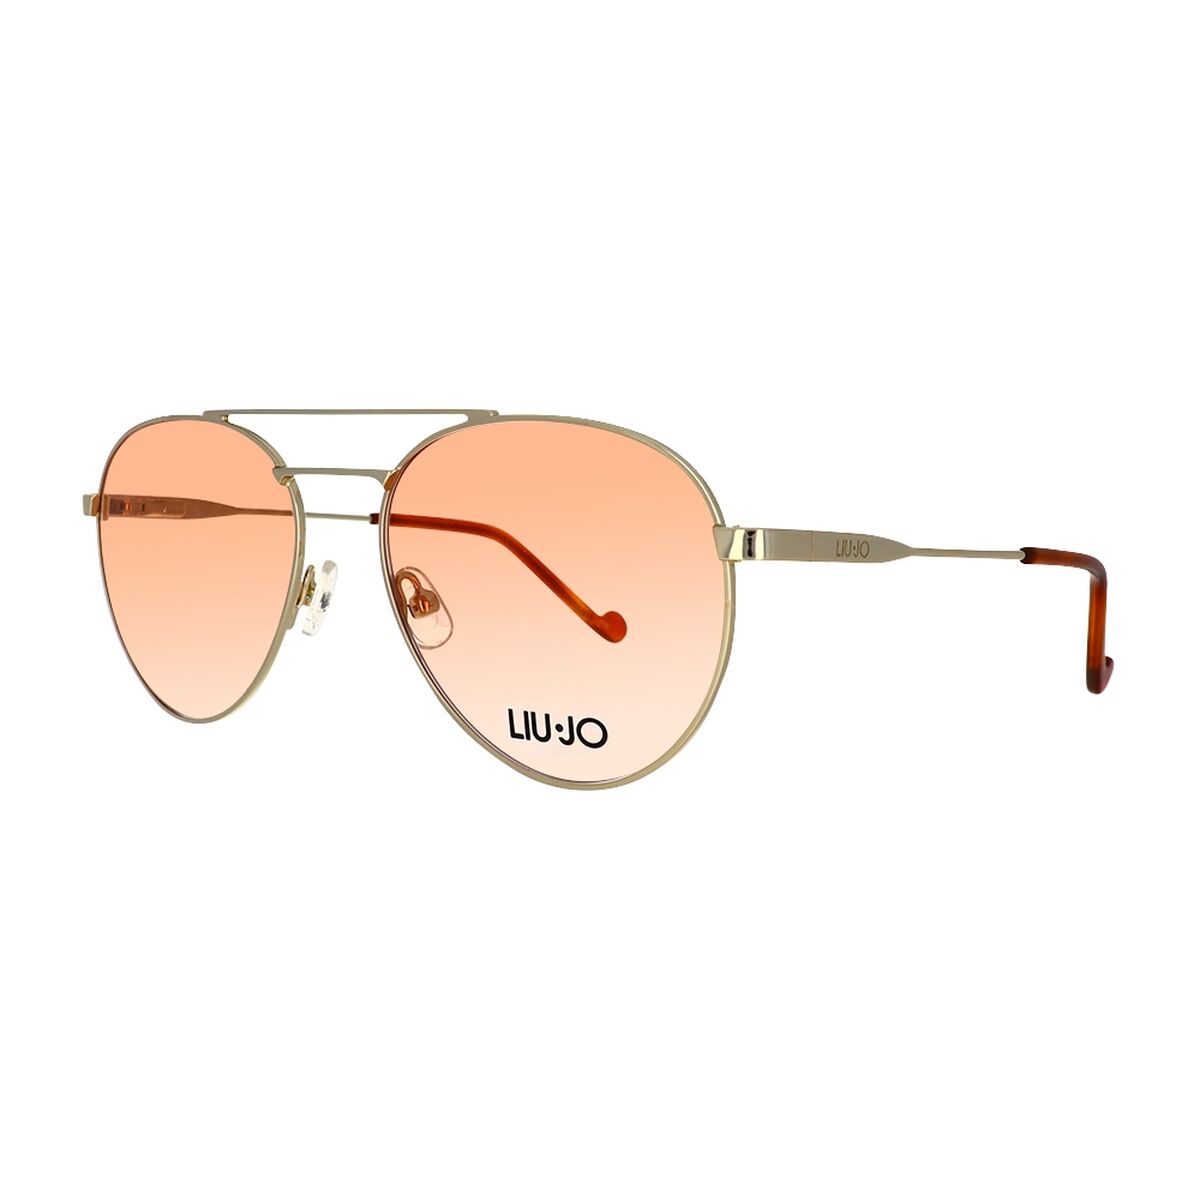 Kaufe Brillenfassung LIU JO LJ2123-710 ø 54 mm bei AWK Flagship um € 55.00